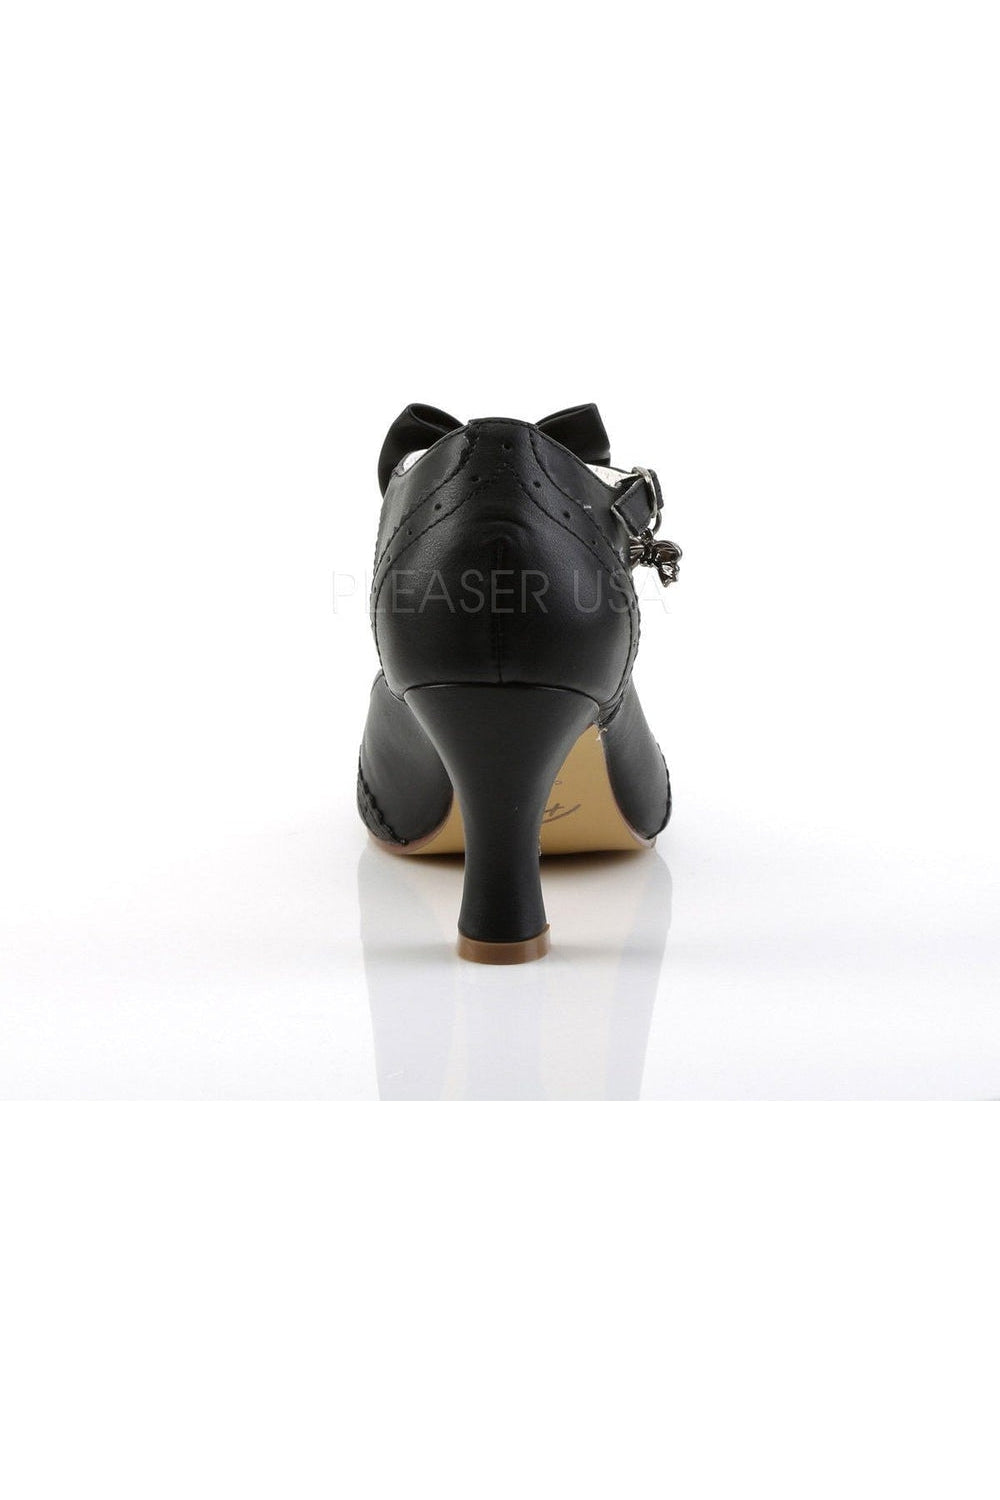 FLAPPER-11 Pump | Black Faux Leather-Pin Up Couture-Pumps-SEXYSHOES.COM